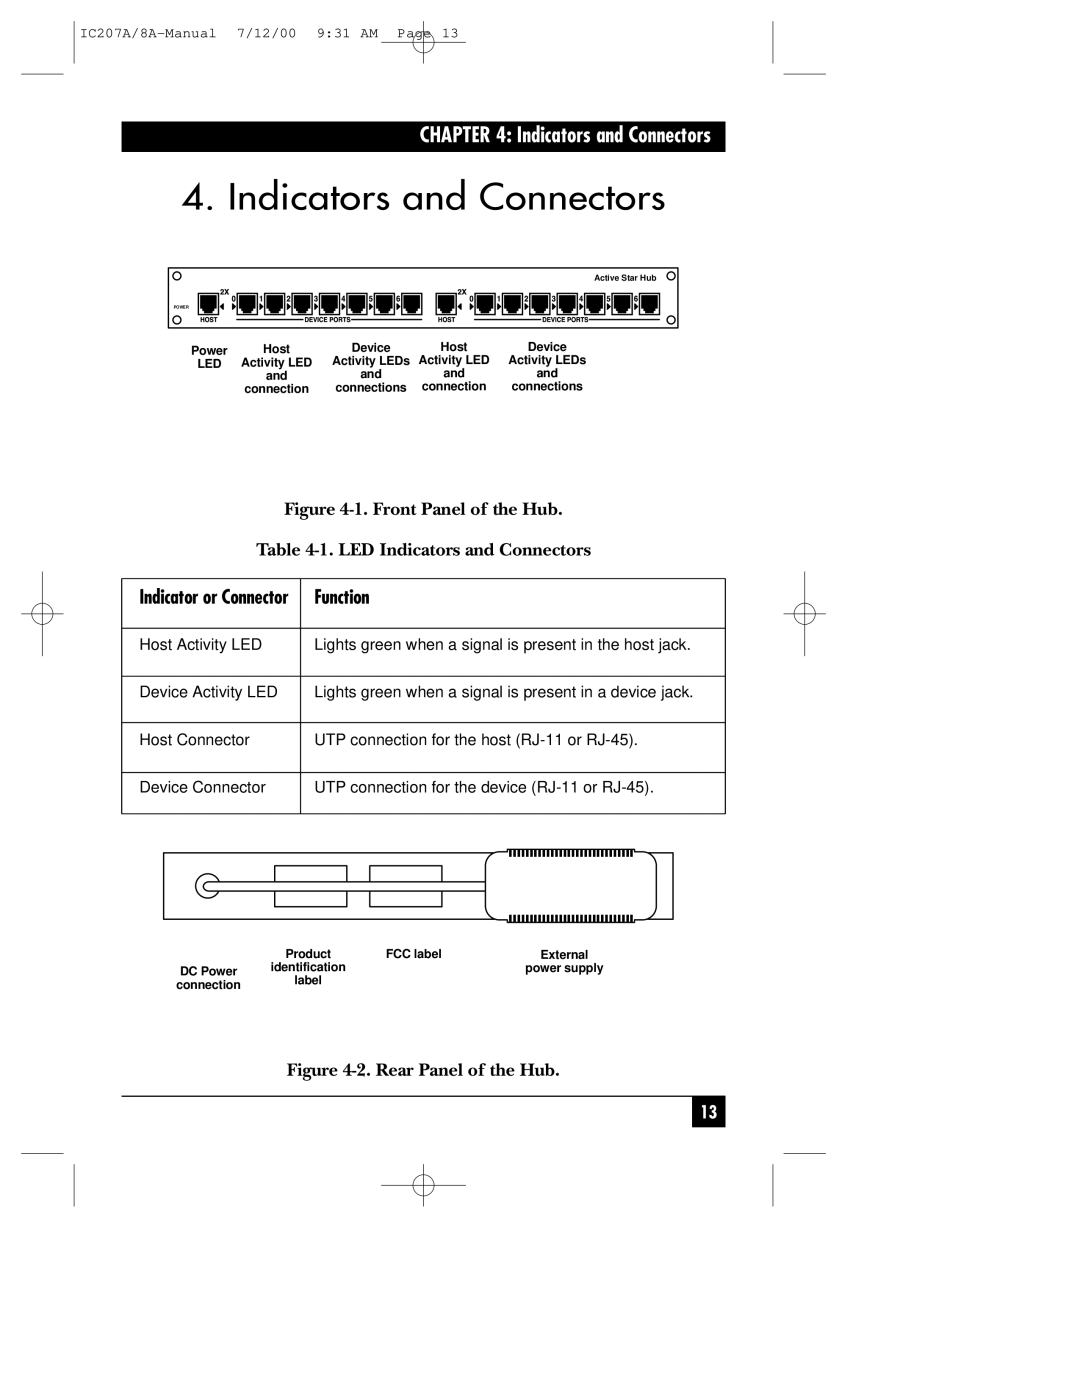 Black Box RJ-11, RJ-45 manual Indicators and Connectors, Function 